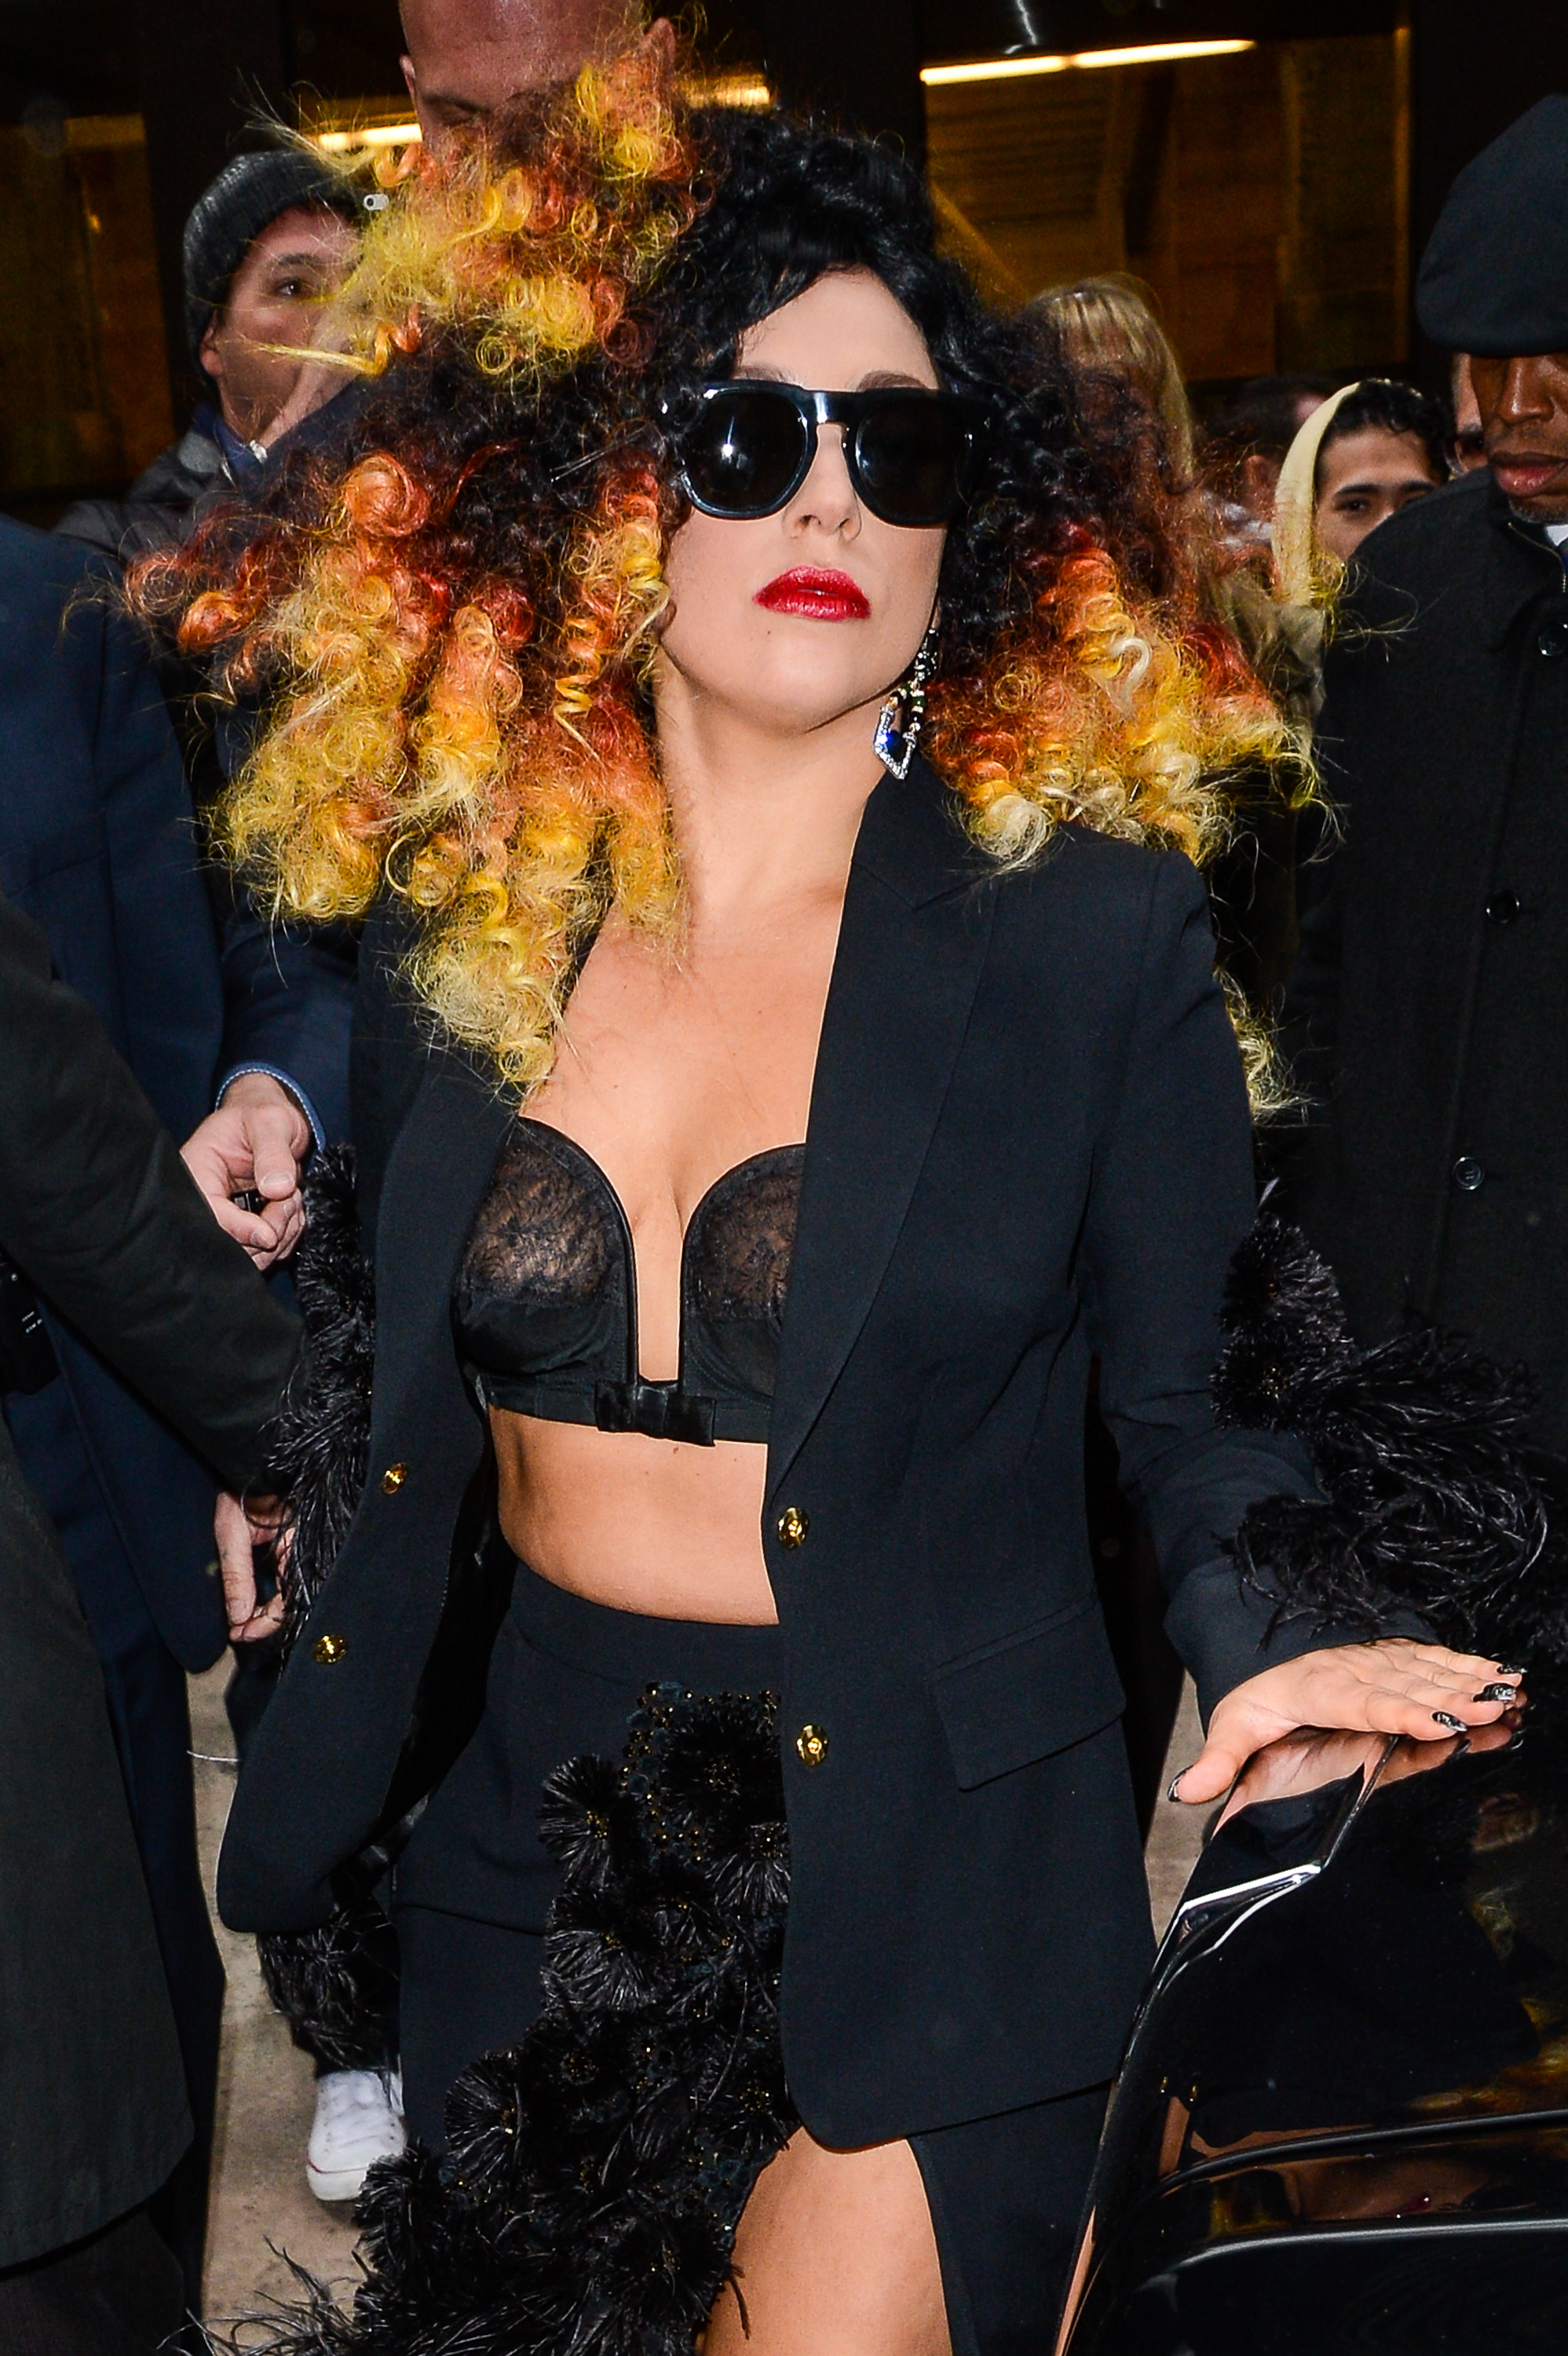 Singer Lady Gaga leaves the Sirius XM Studios in New York City on Dec. 2, 2014 (Ray Tamarra&mdash;GC Images)